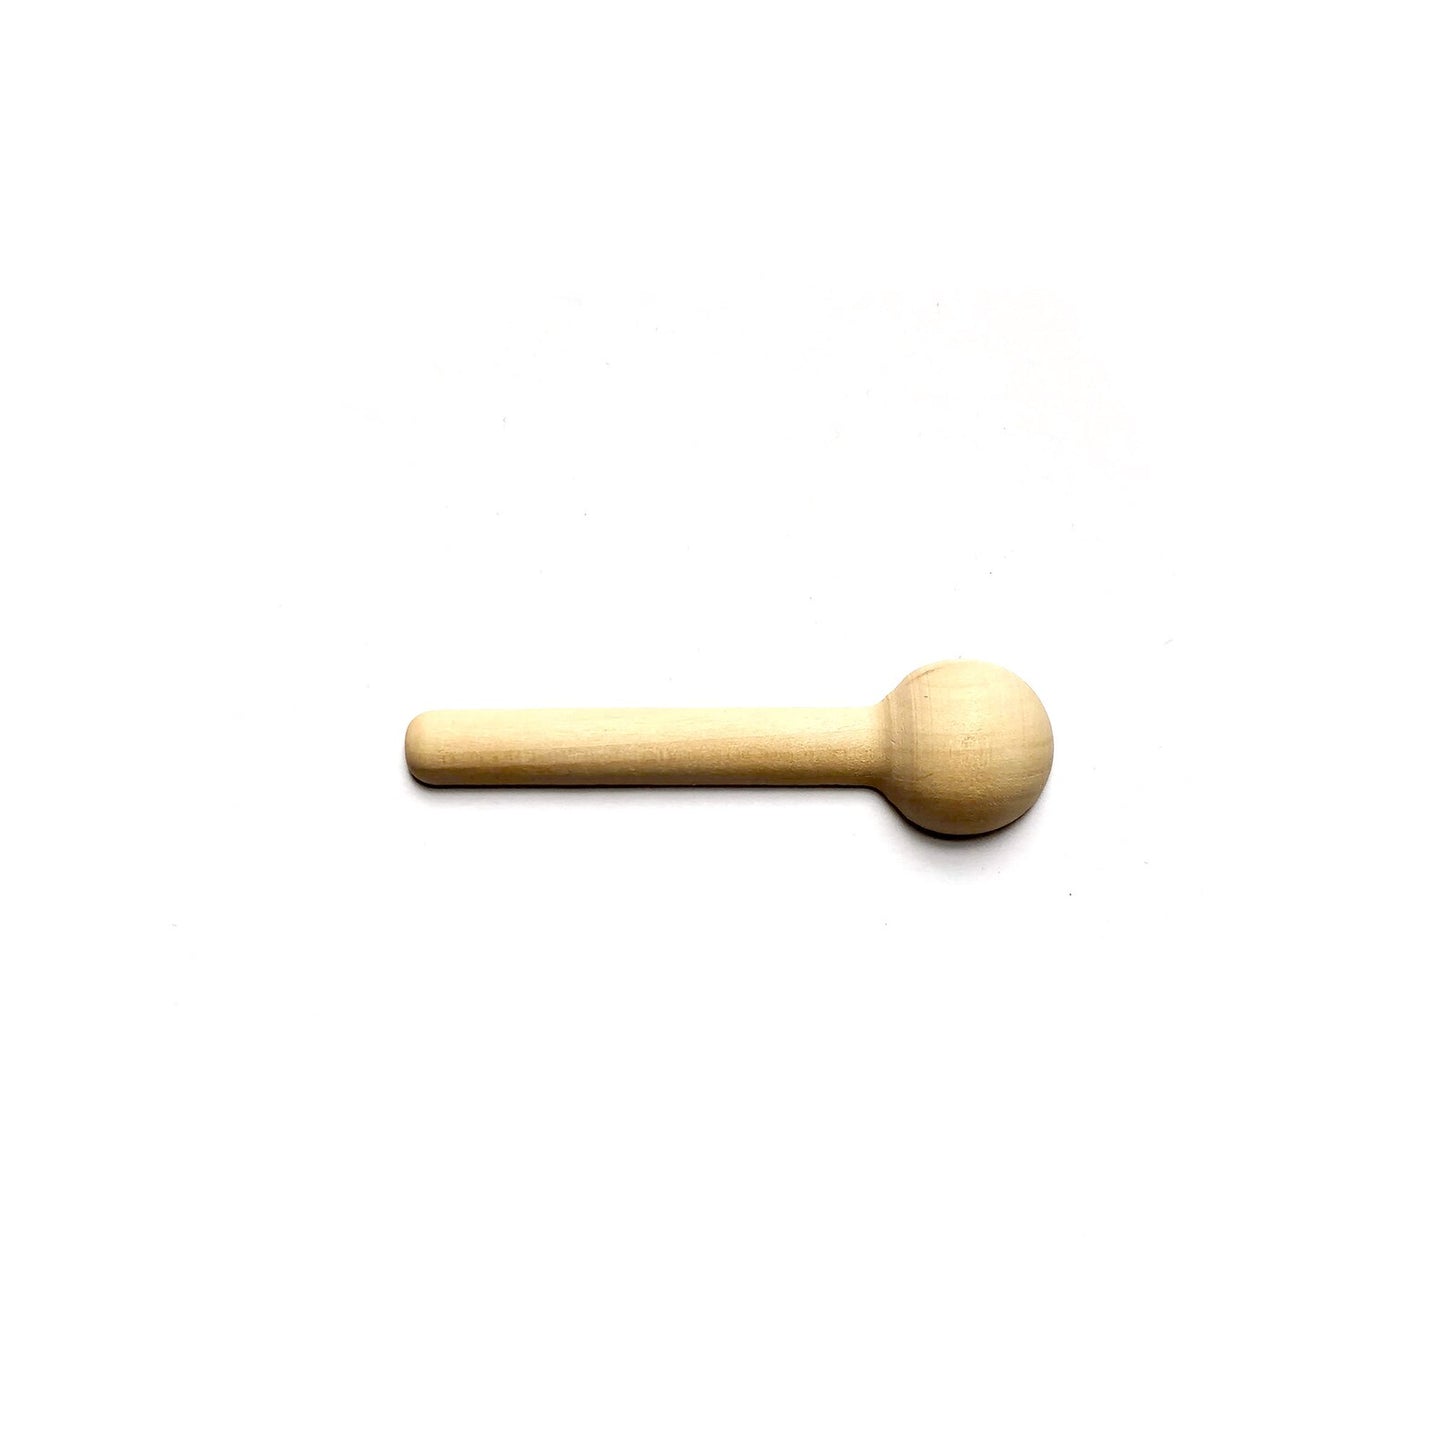 Tiny Wooden Scoop | Spoon